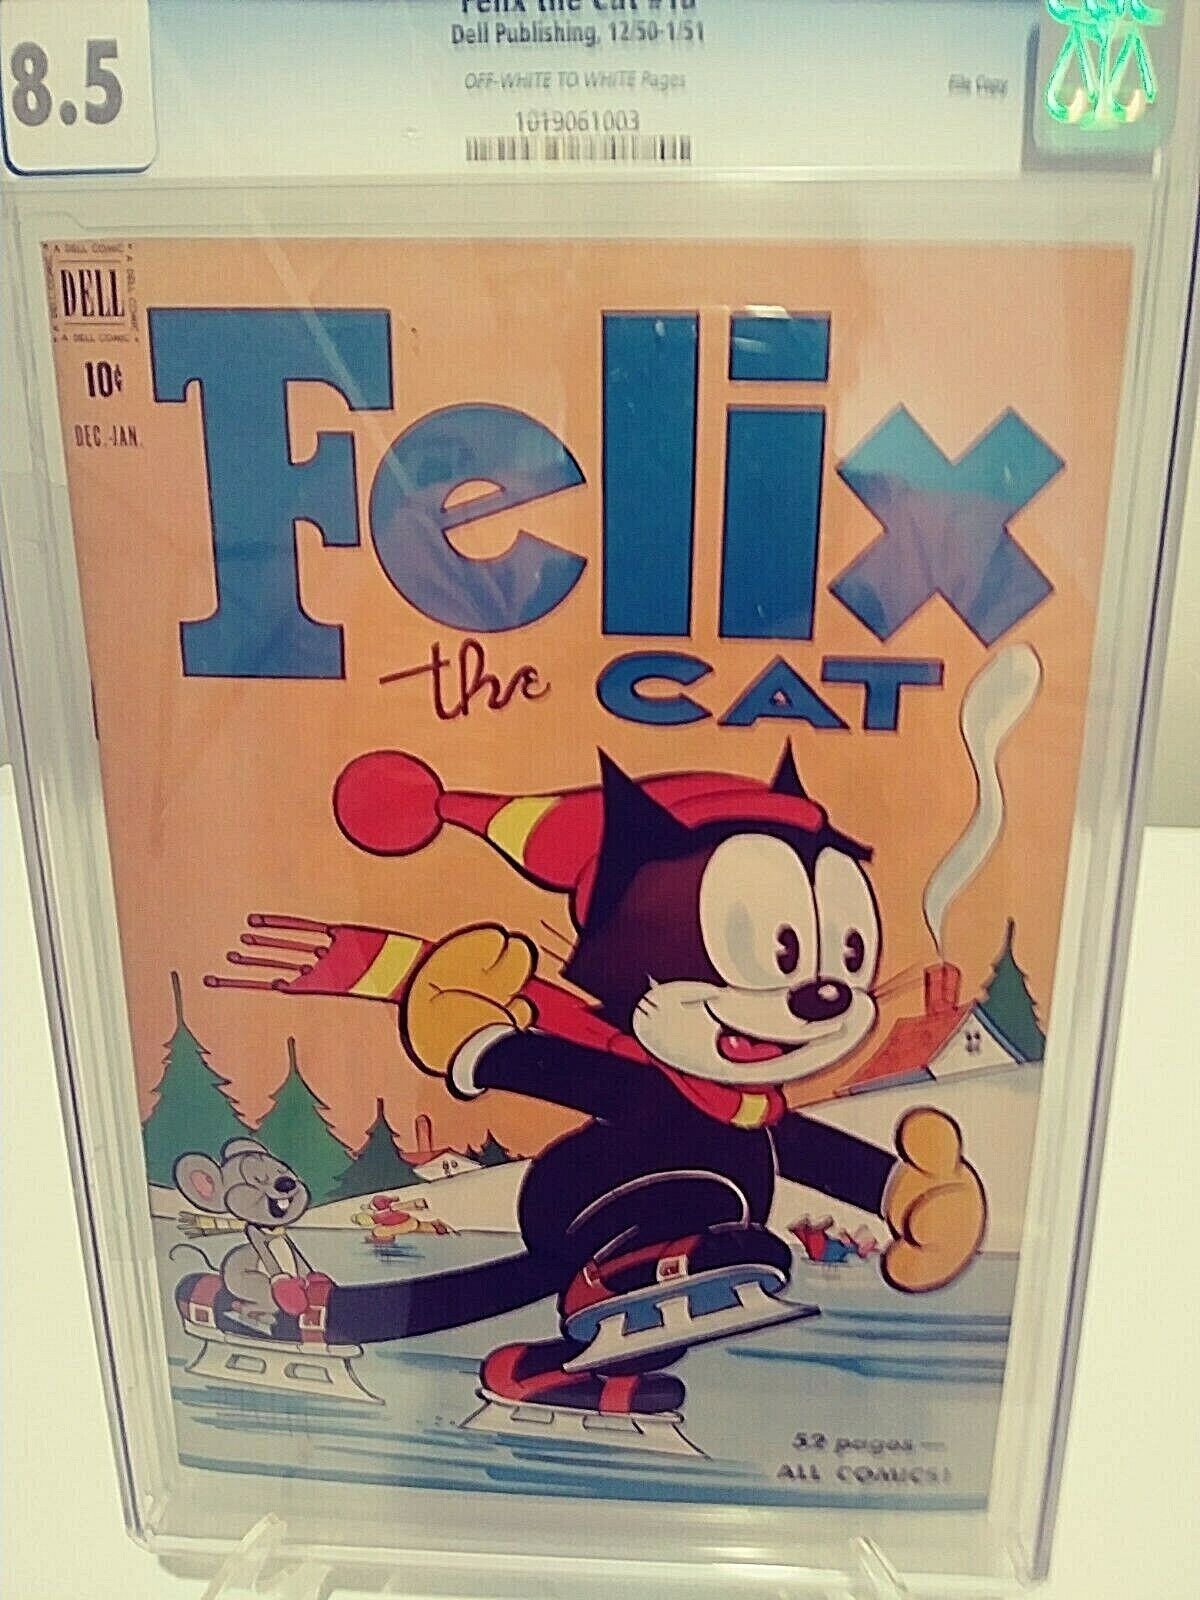 FELIX The CAT #18 CGC 8.5 - DELL Publishing 12/1950-1/1951 file copy 